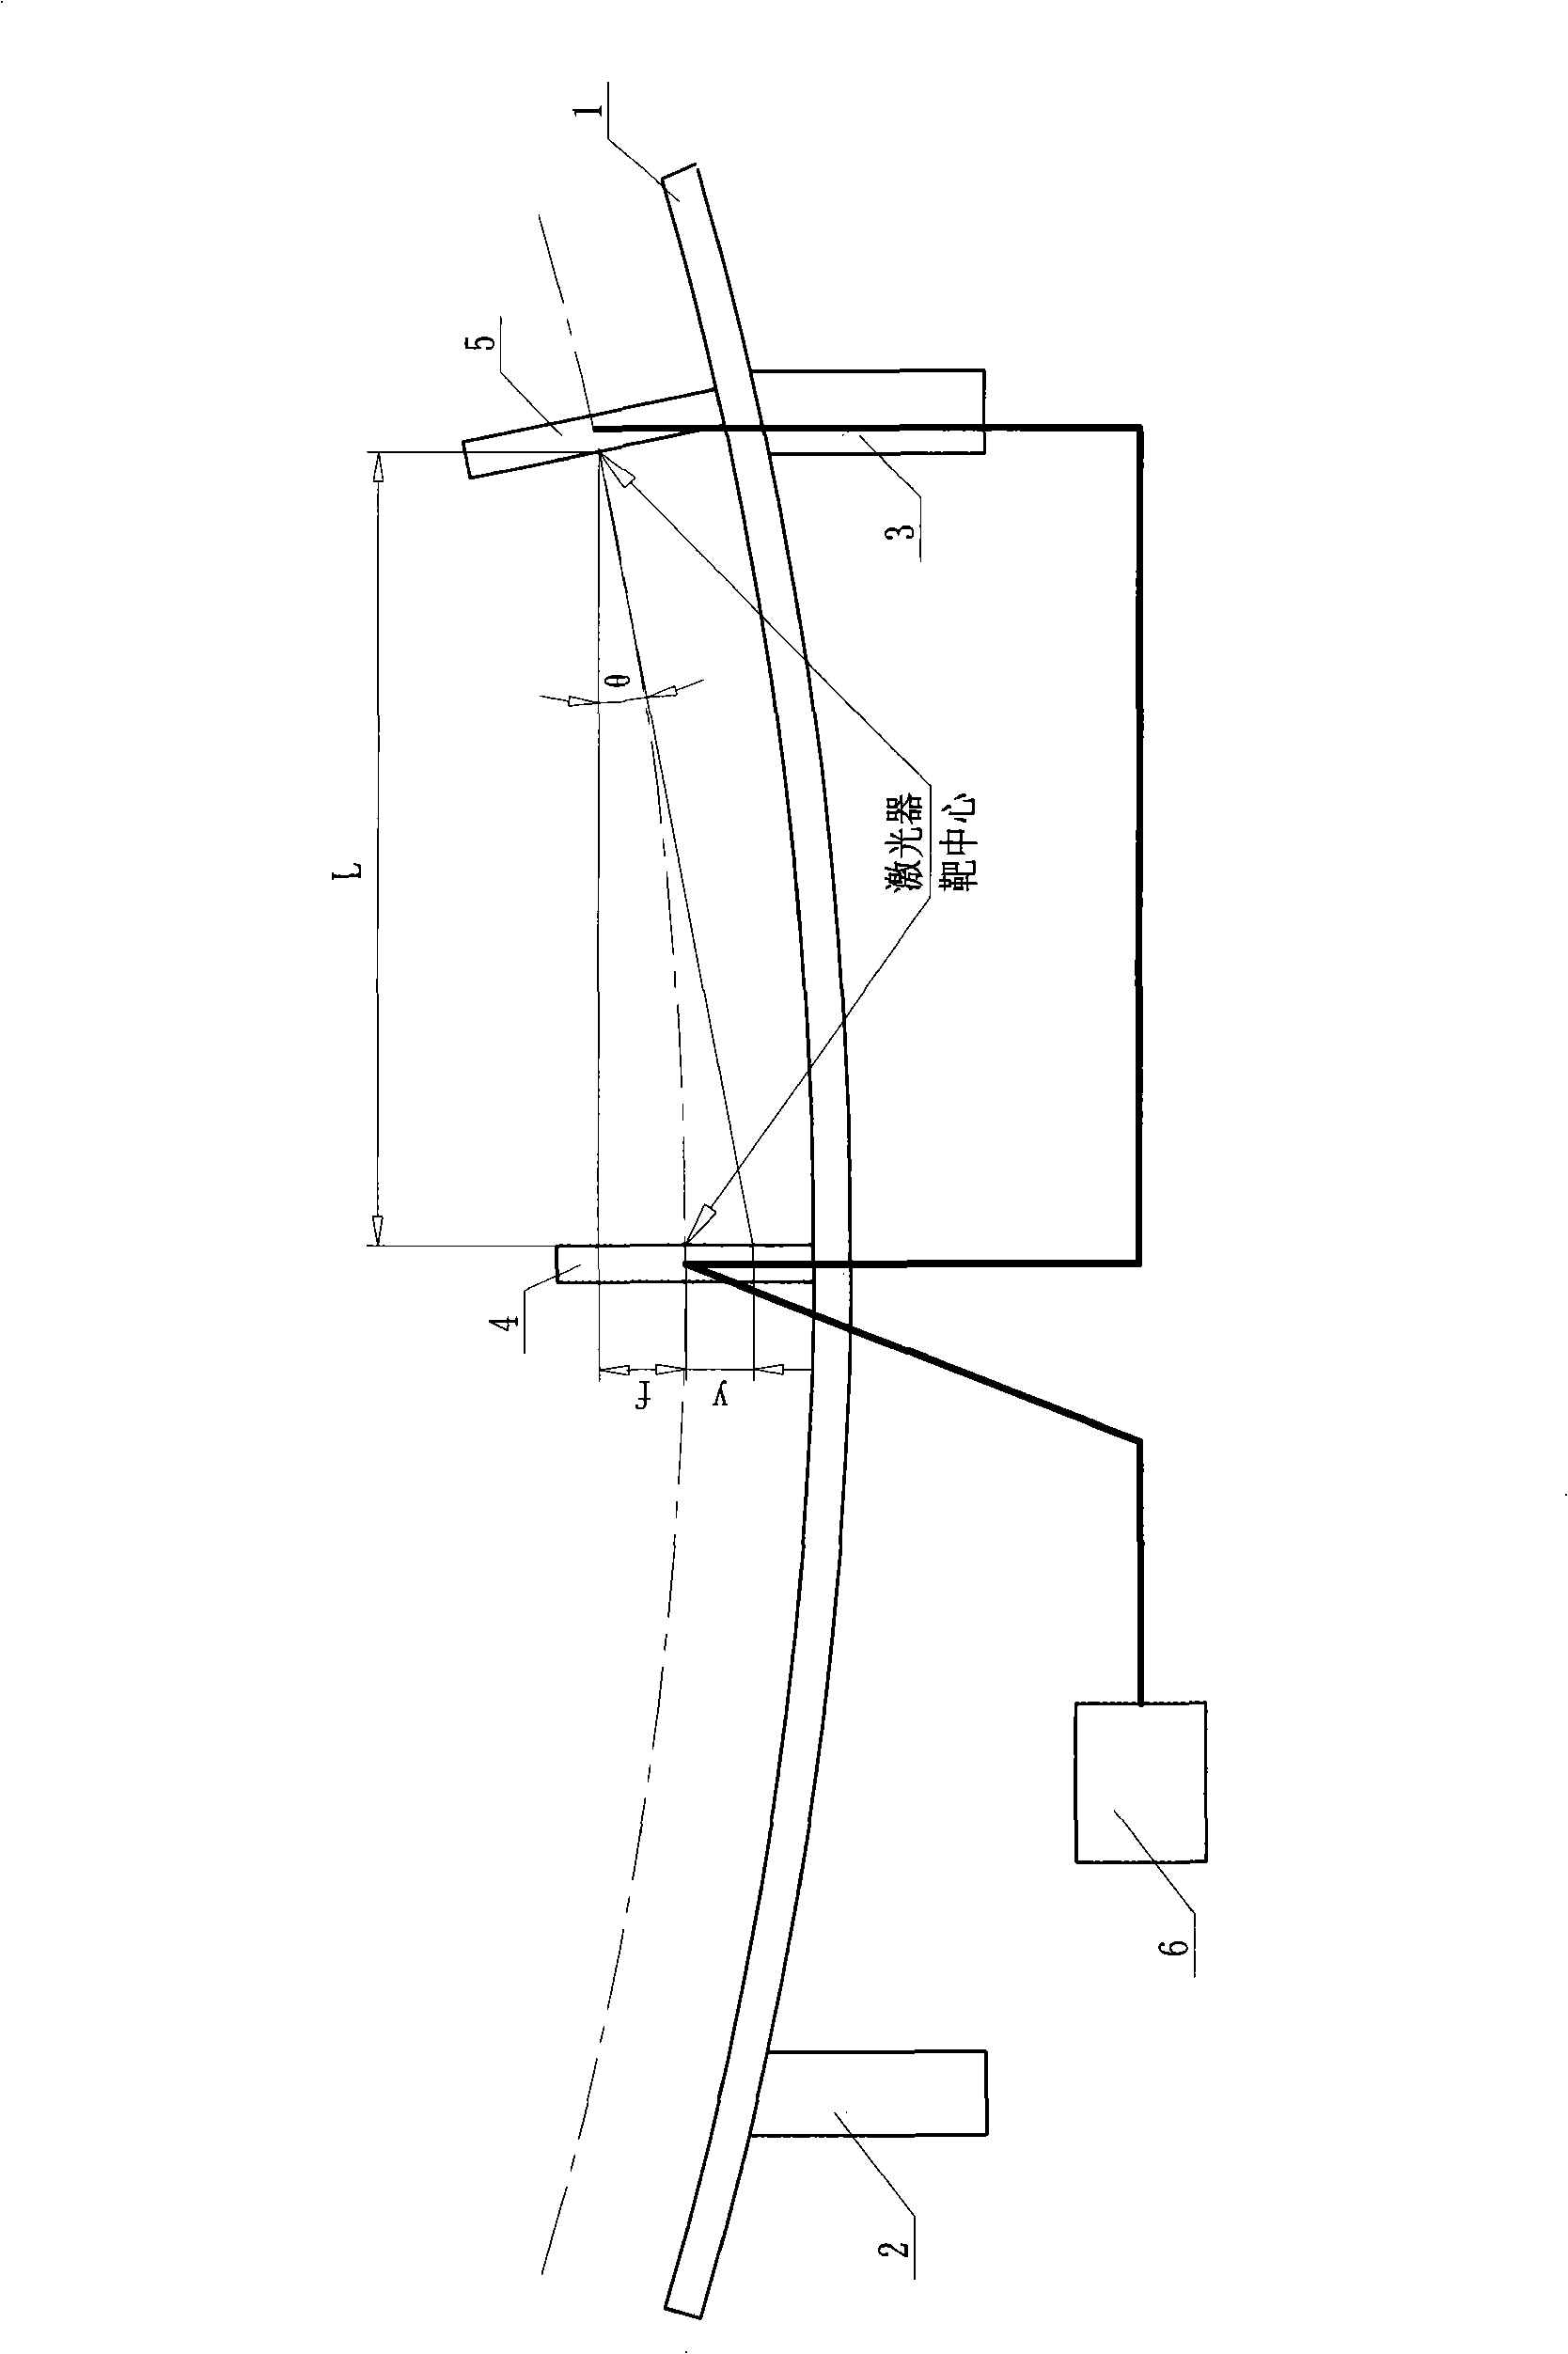 Method for measuring rotating shaft deflection